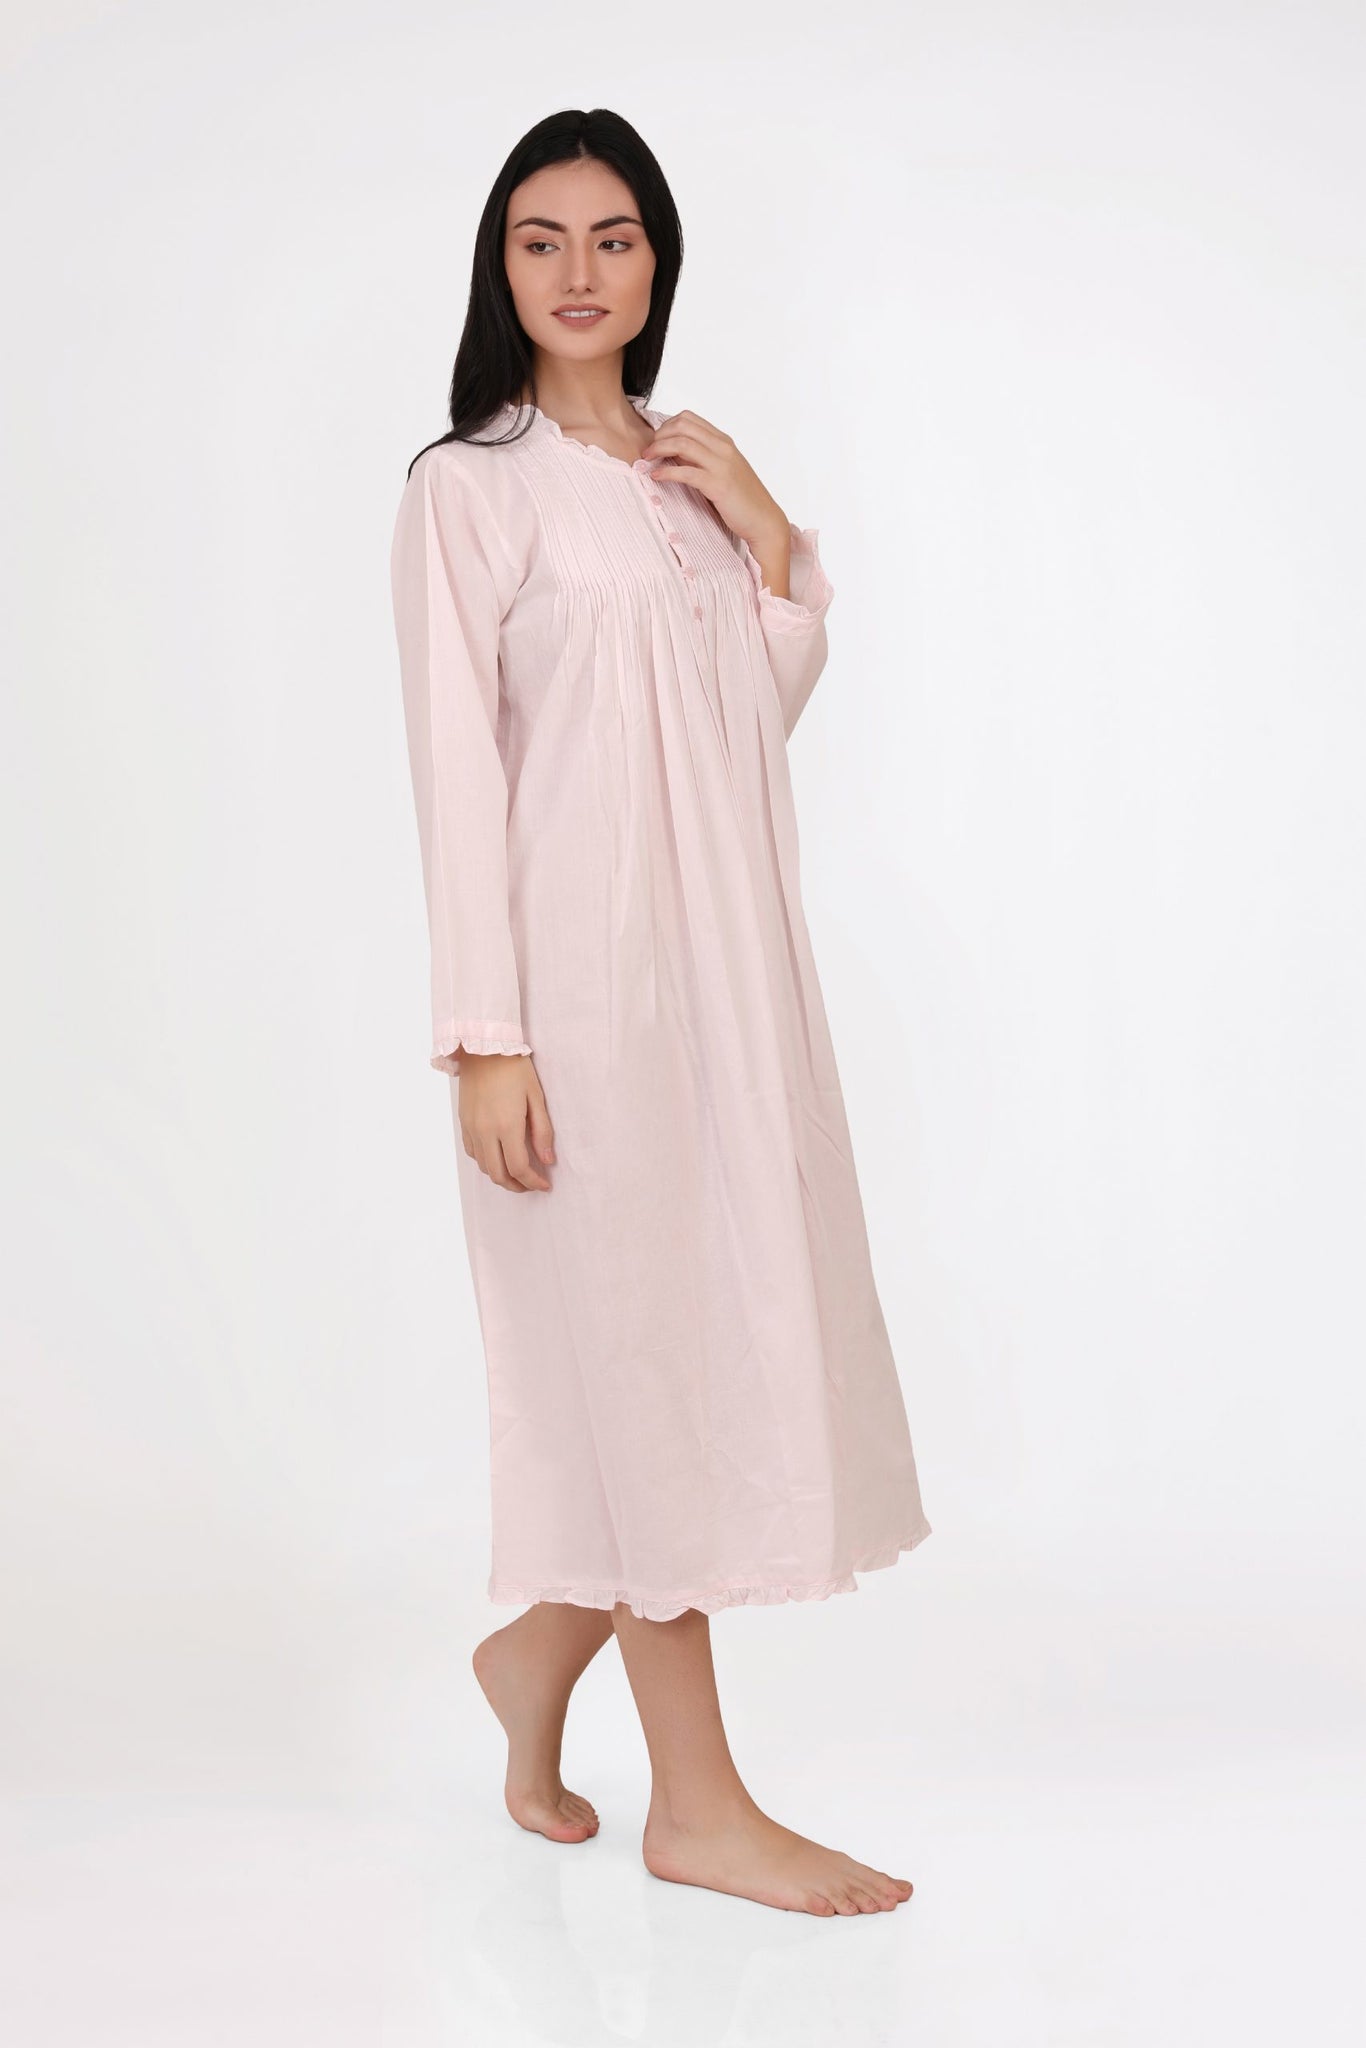 Arabella 100% Cotton Night Dress Long Sleeved Pale Pink